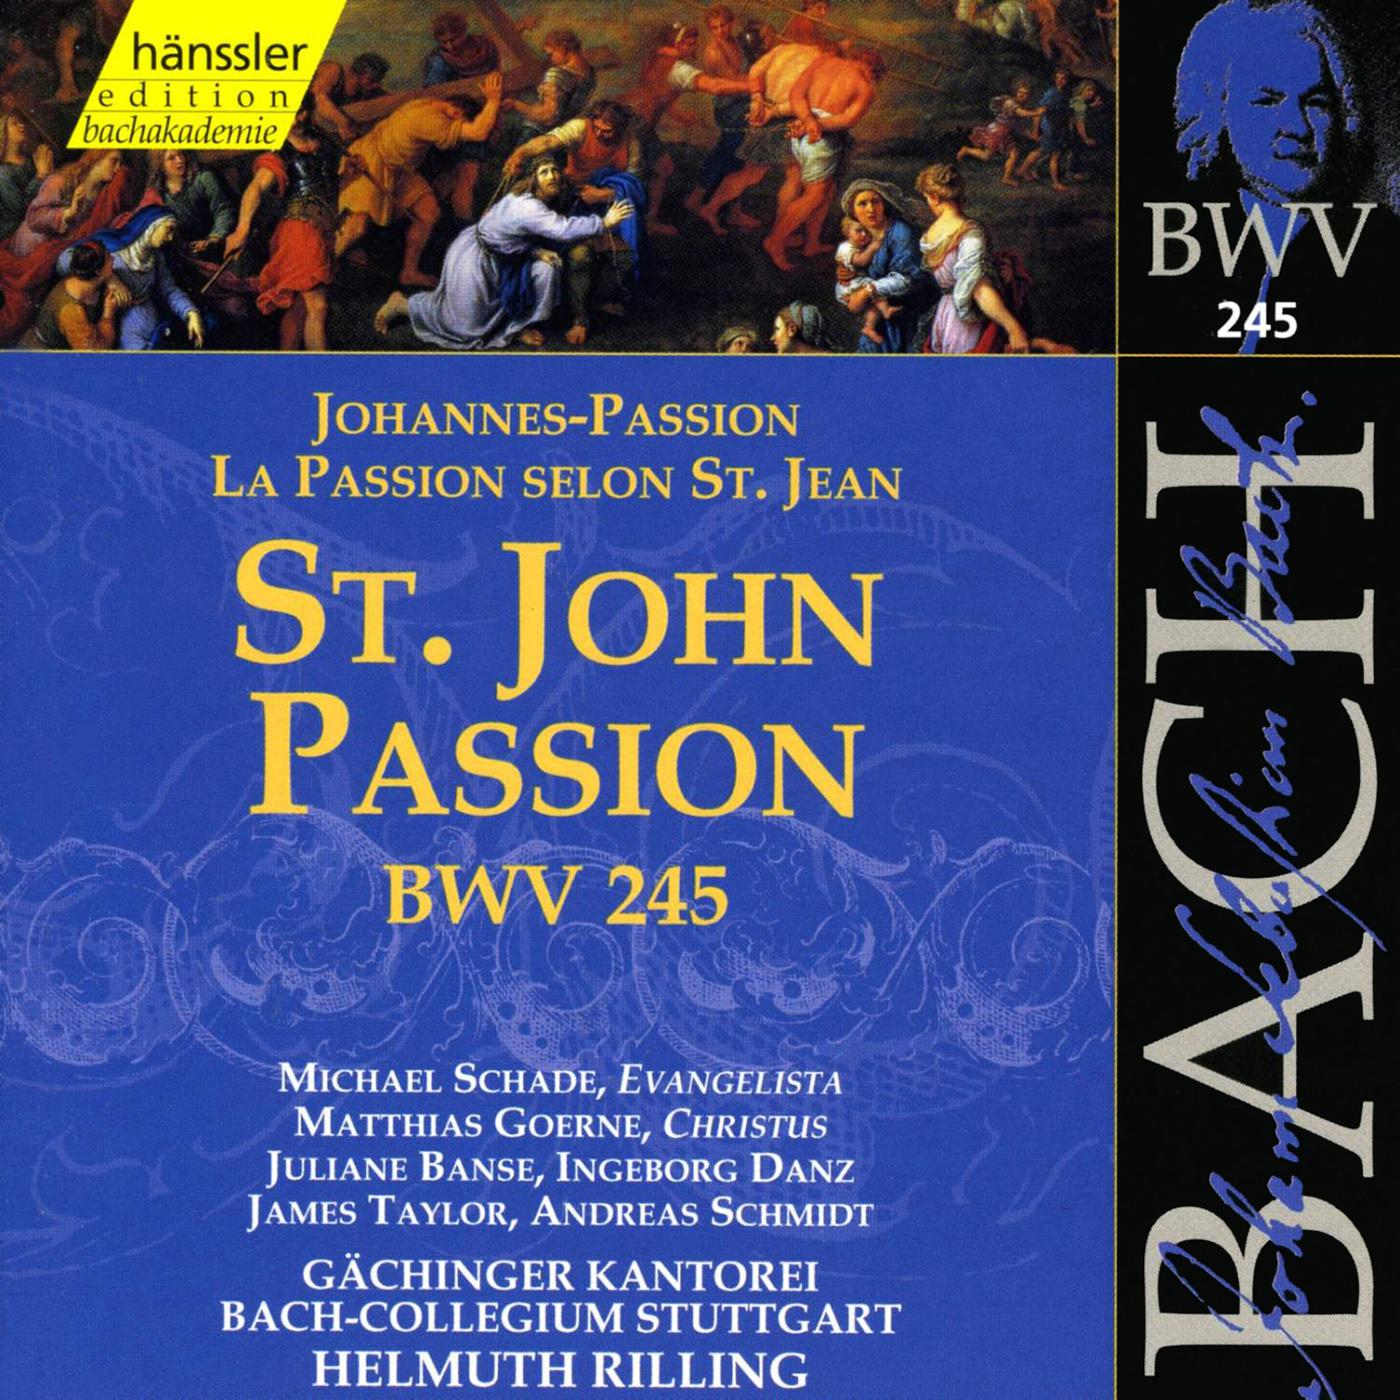 St. John Passion, BWV 245: Die Juden aber schrieen (Tenor, Chorus, Bass)